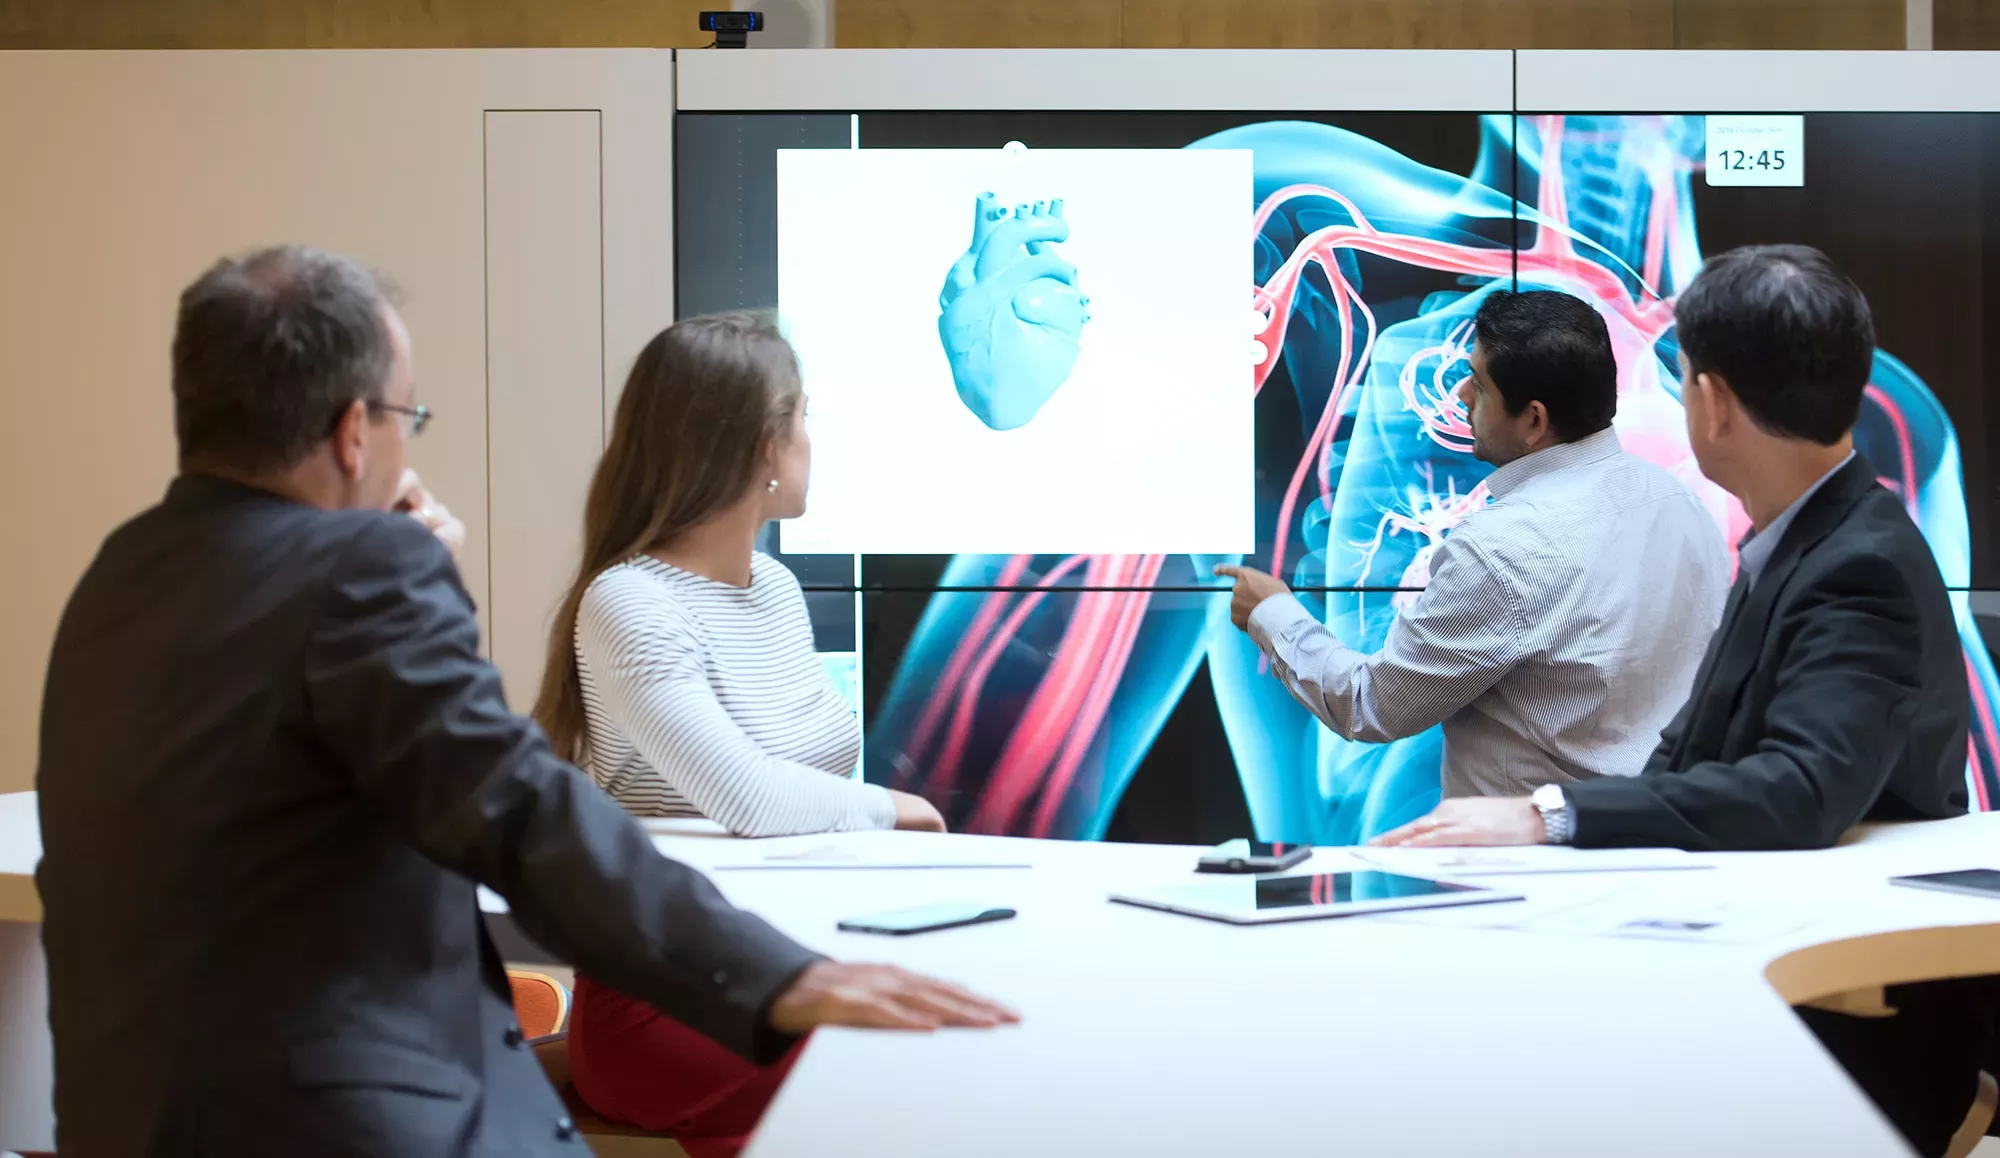 Mitarbeitende betrachten während eines Meetings die dreidimensionale Projektion eines Herzens / Des collaborateurs regardent la projection tridimensionnelle d'un cœur pendant une réunion